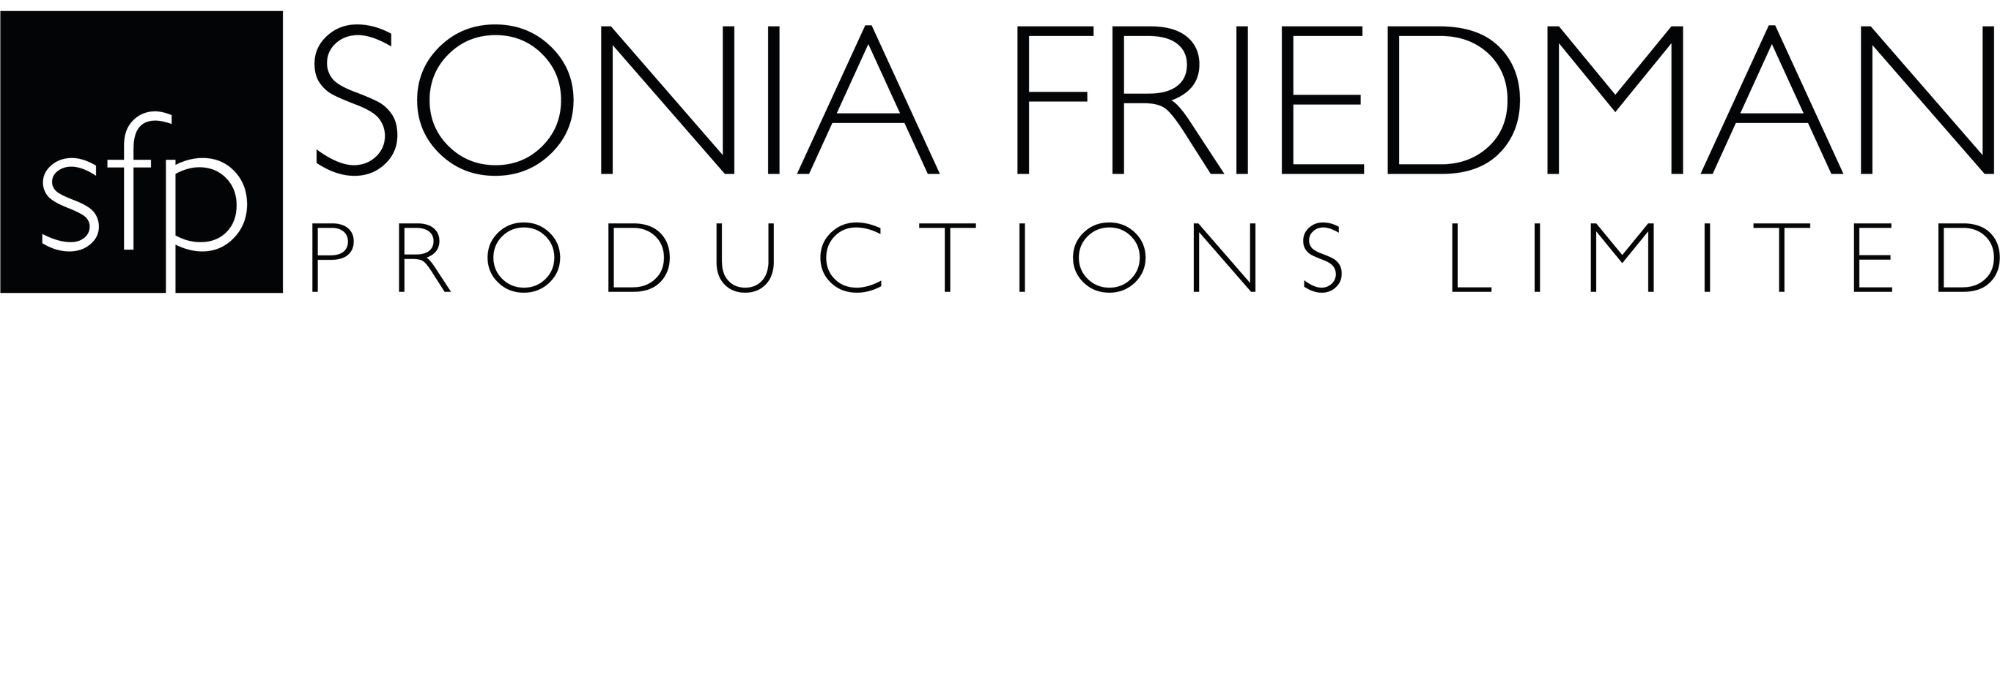 Sonia Friedman Productions